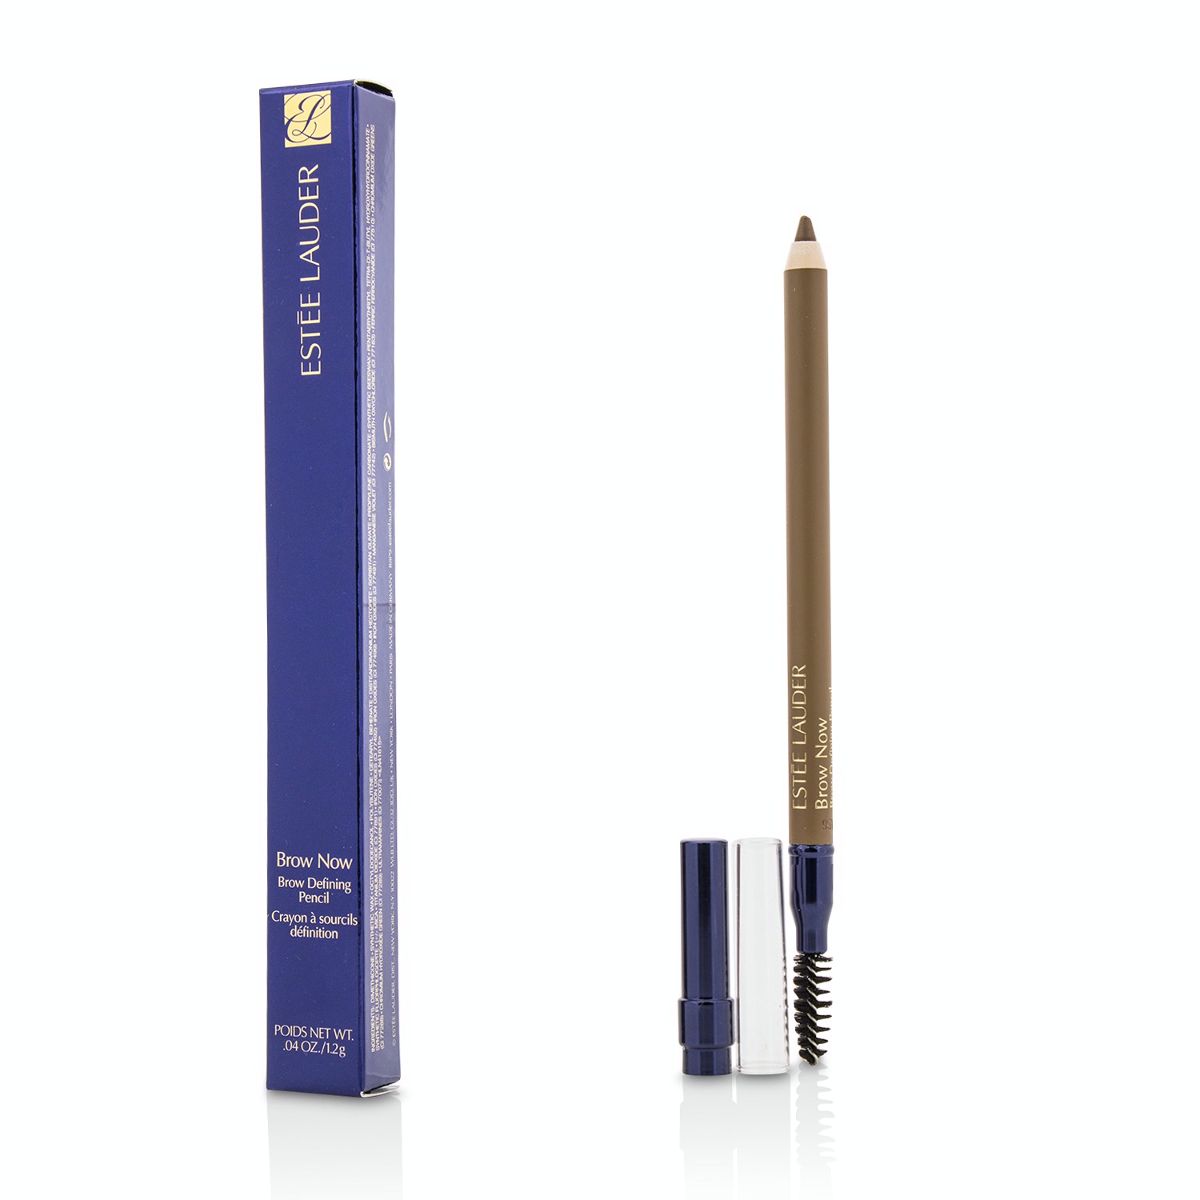 Brow Now Brow Defining Pencil - # 02 Light Brunette Estee Lauder Image